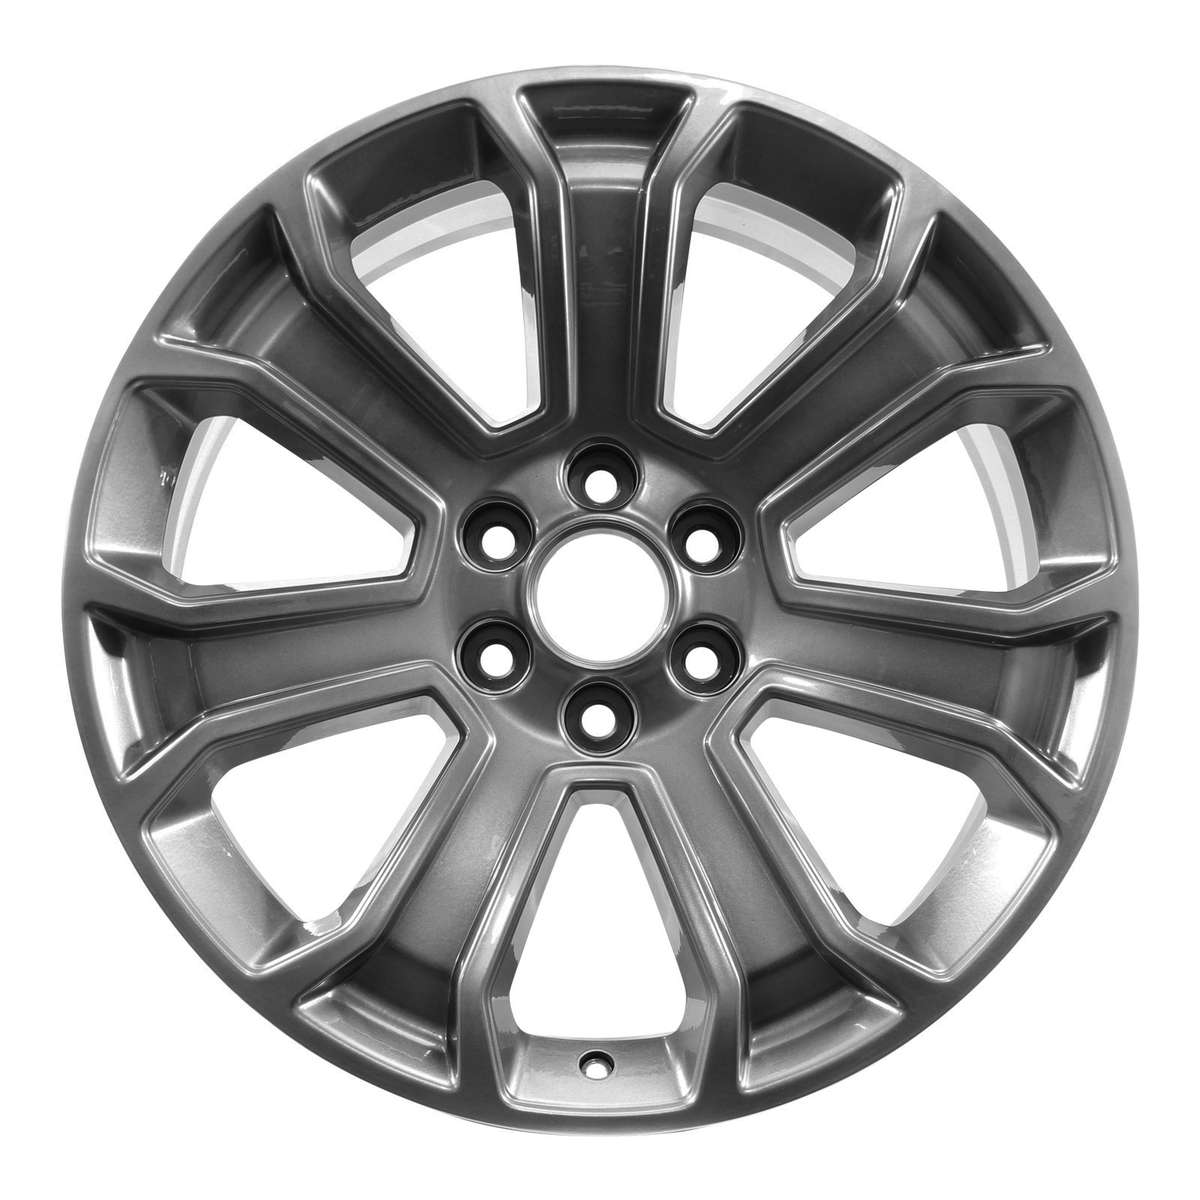 2014 Chevrolet Silverado 1500 New 22" Replacement Wheel Rim RW5665H